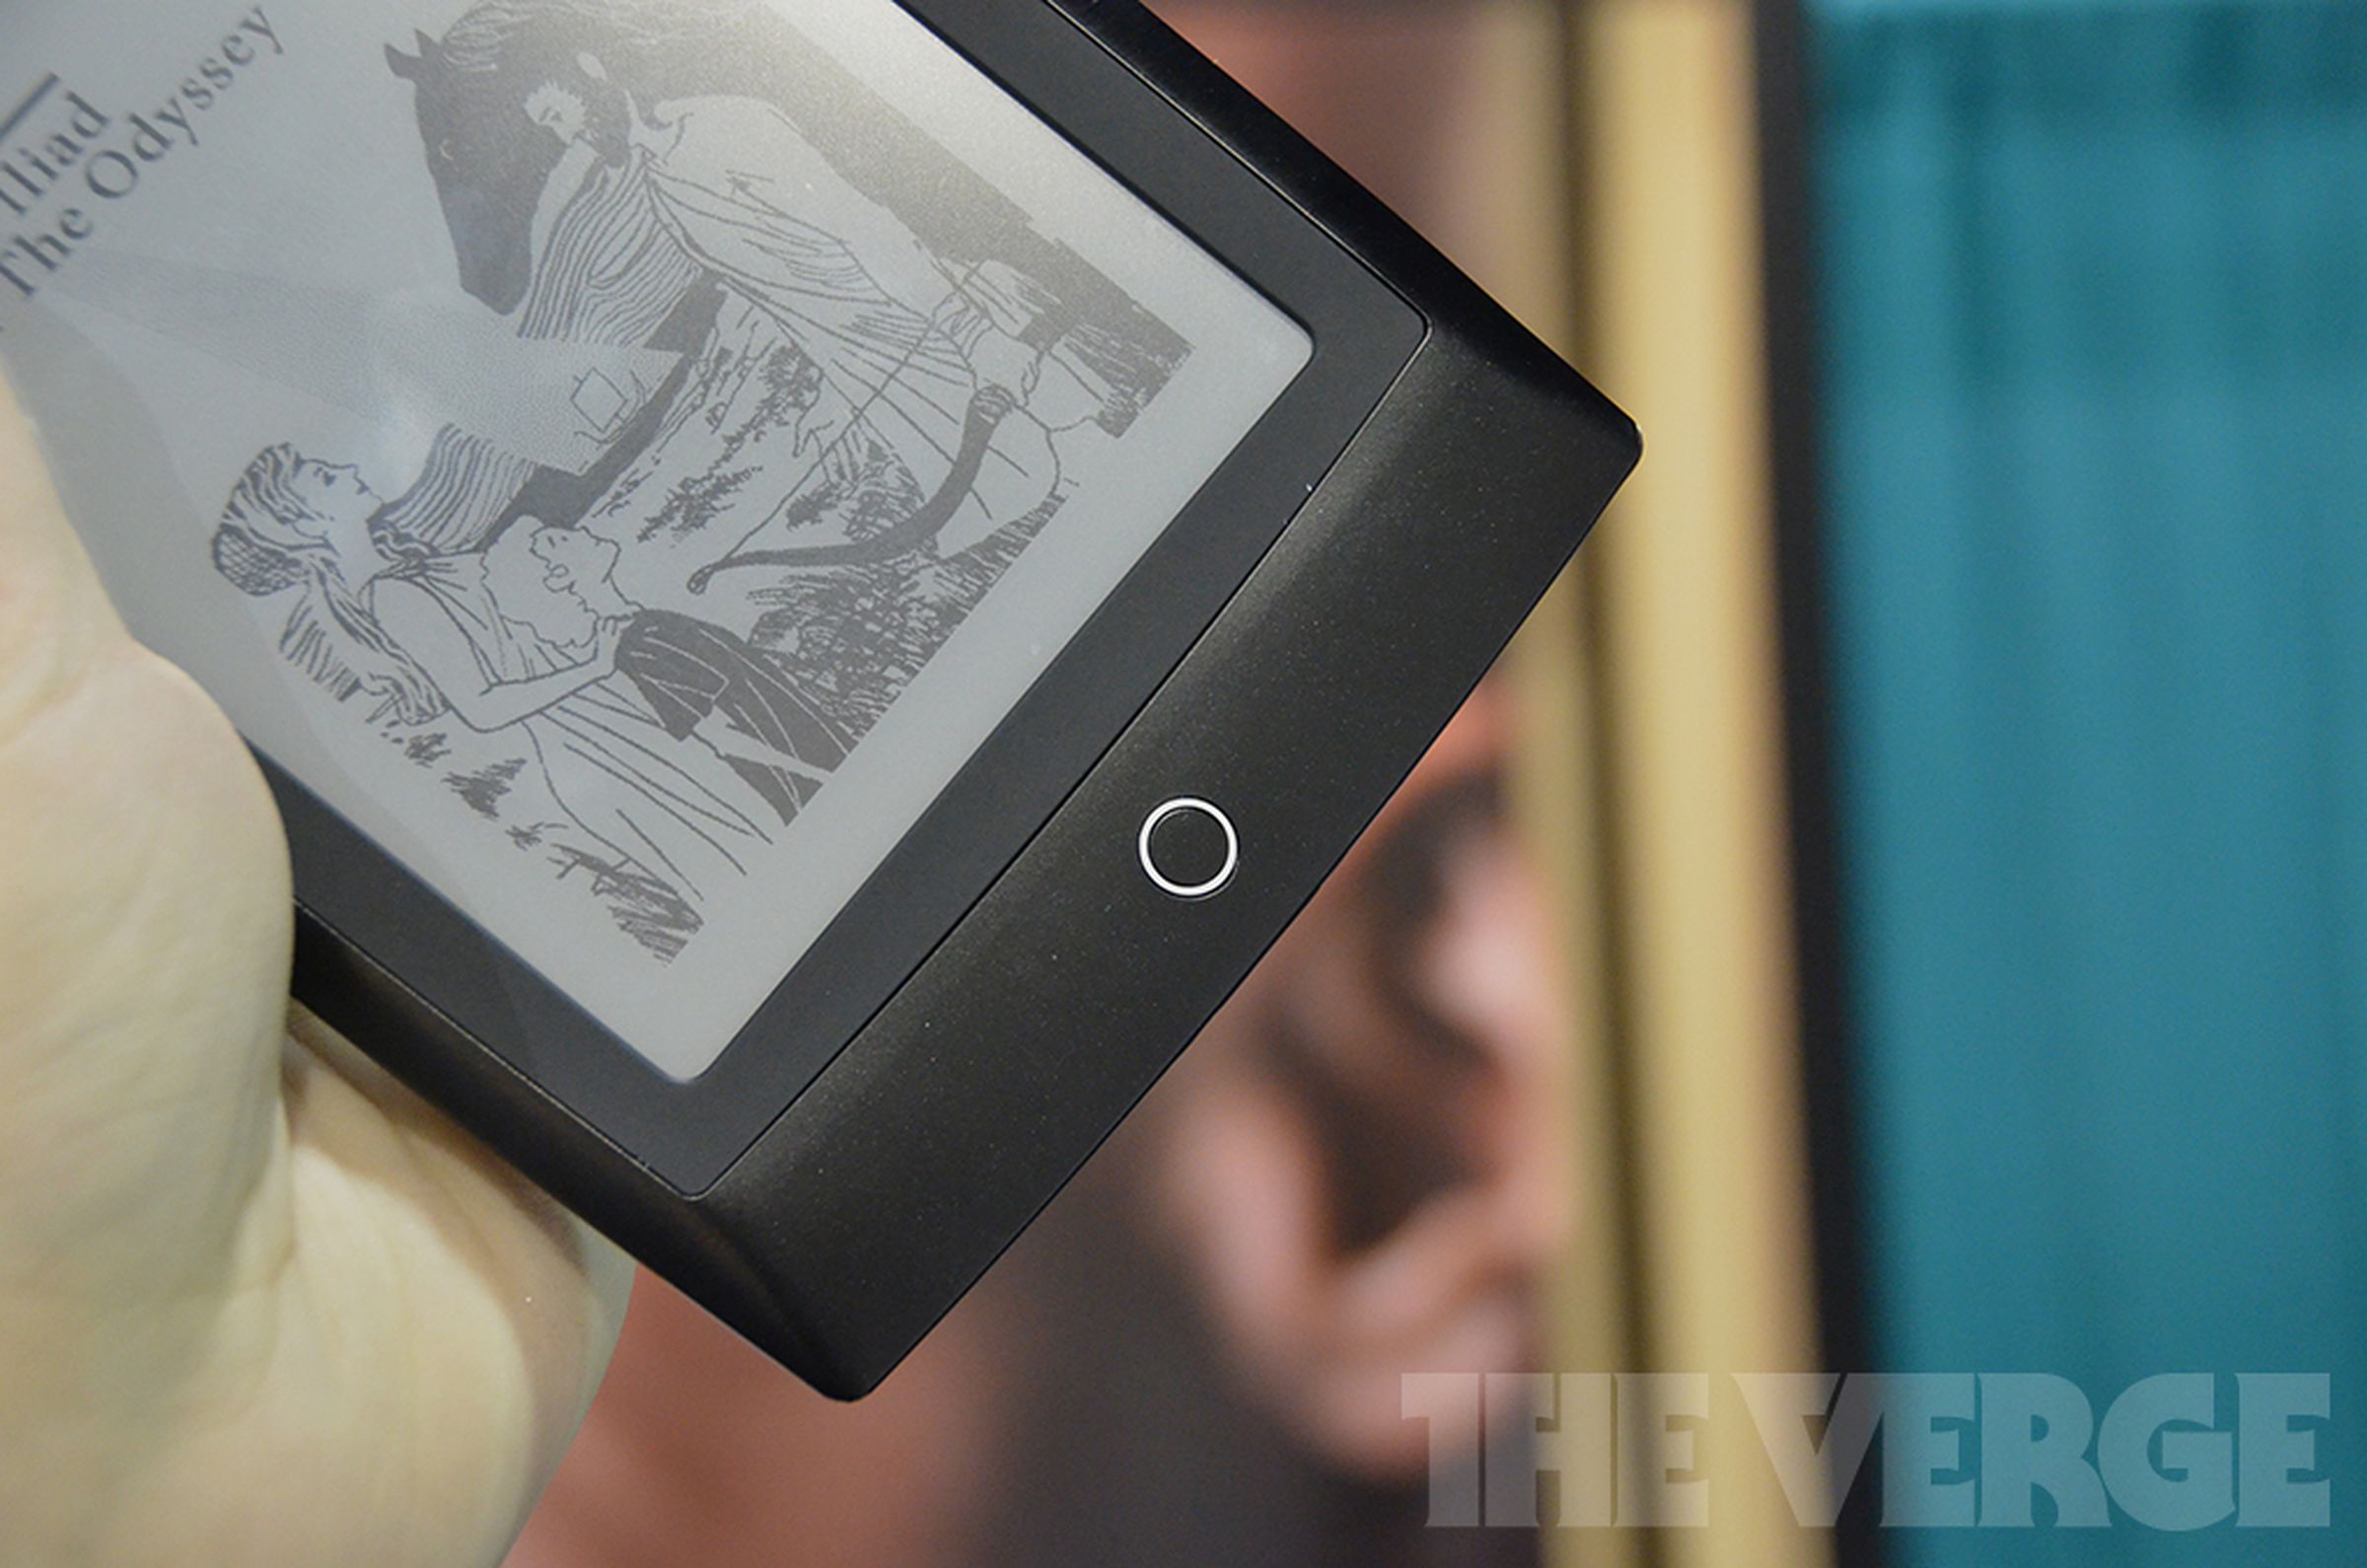 Bookeen Cybook Odyssey e-reader hands-on photos